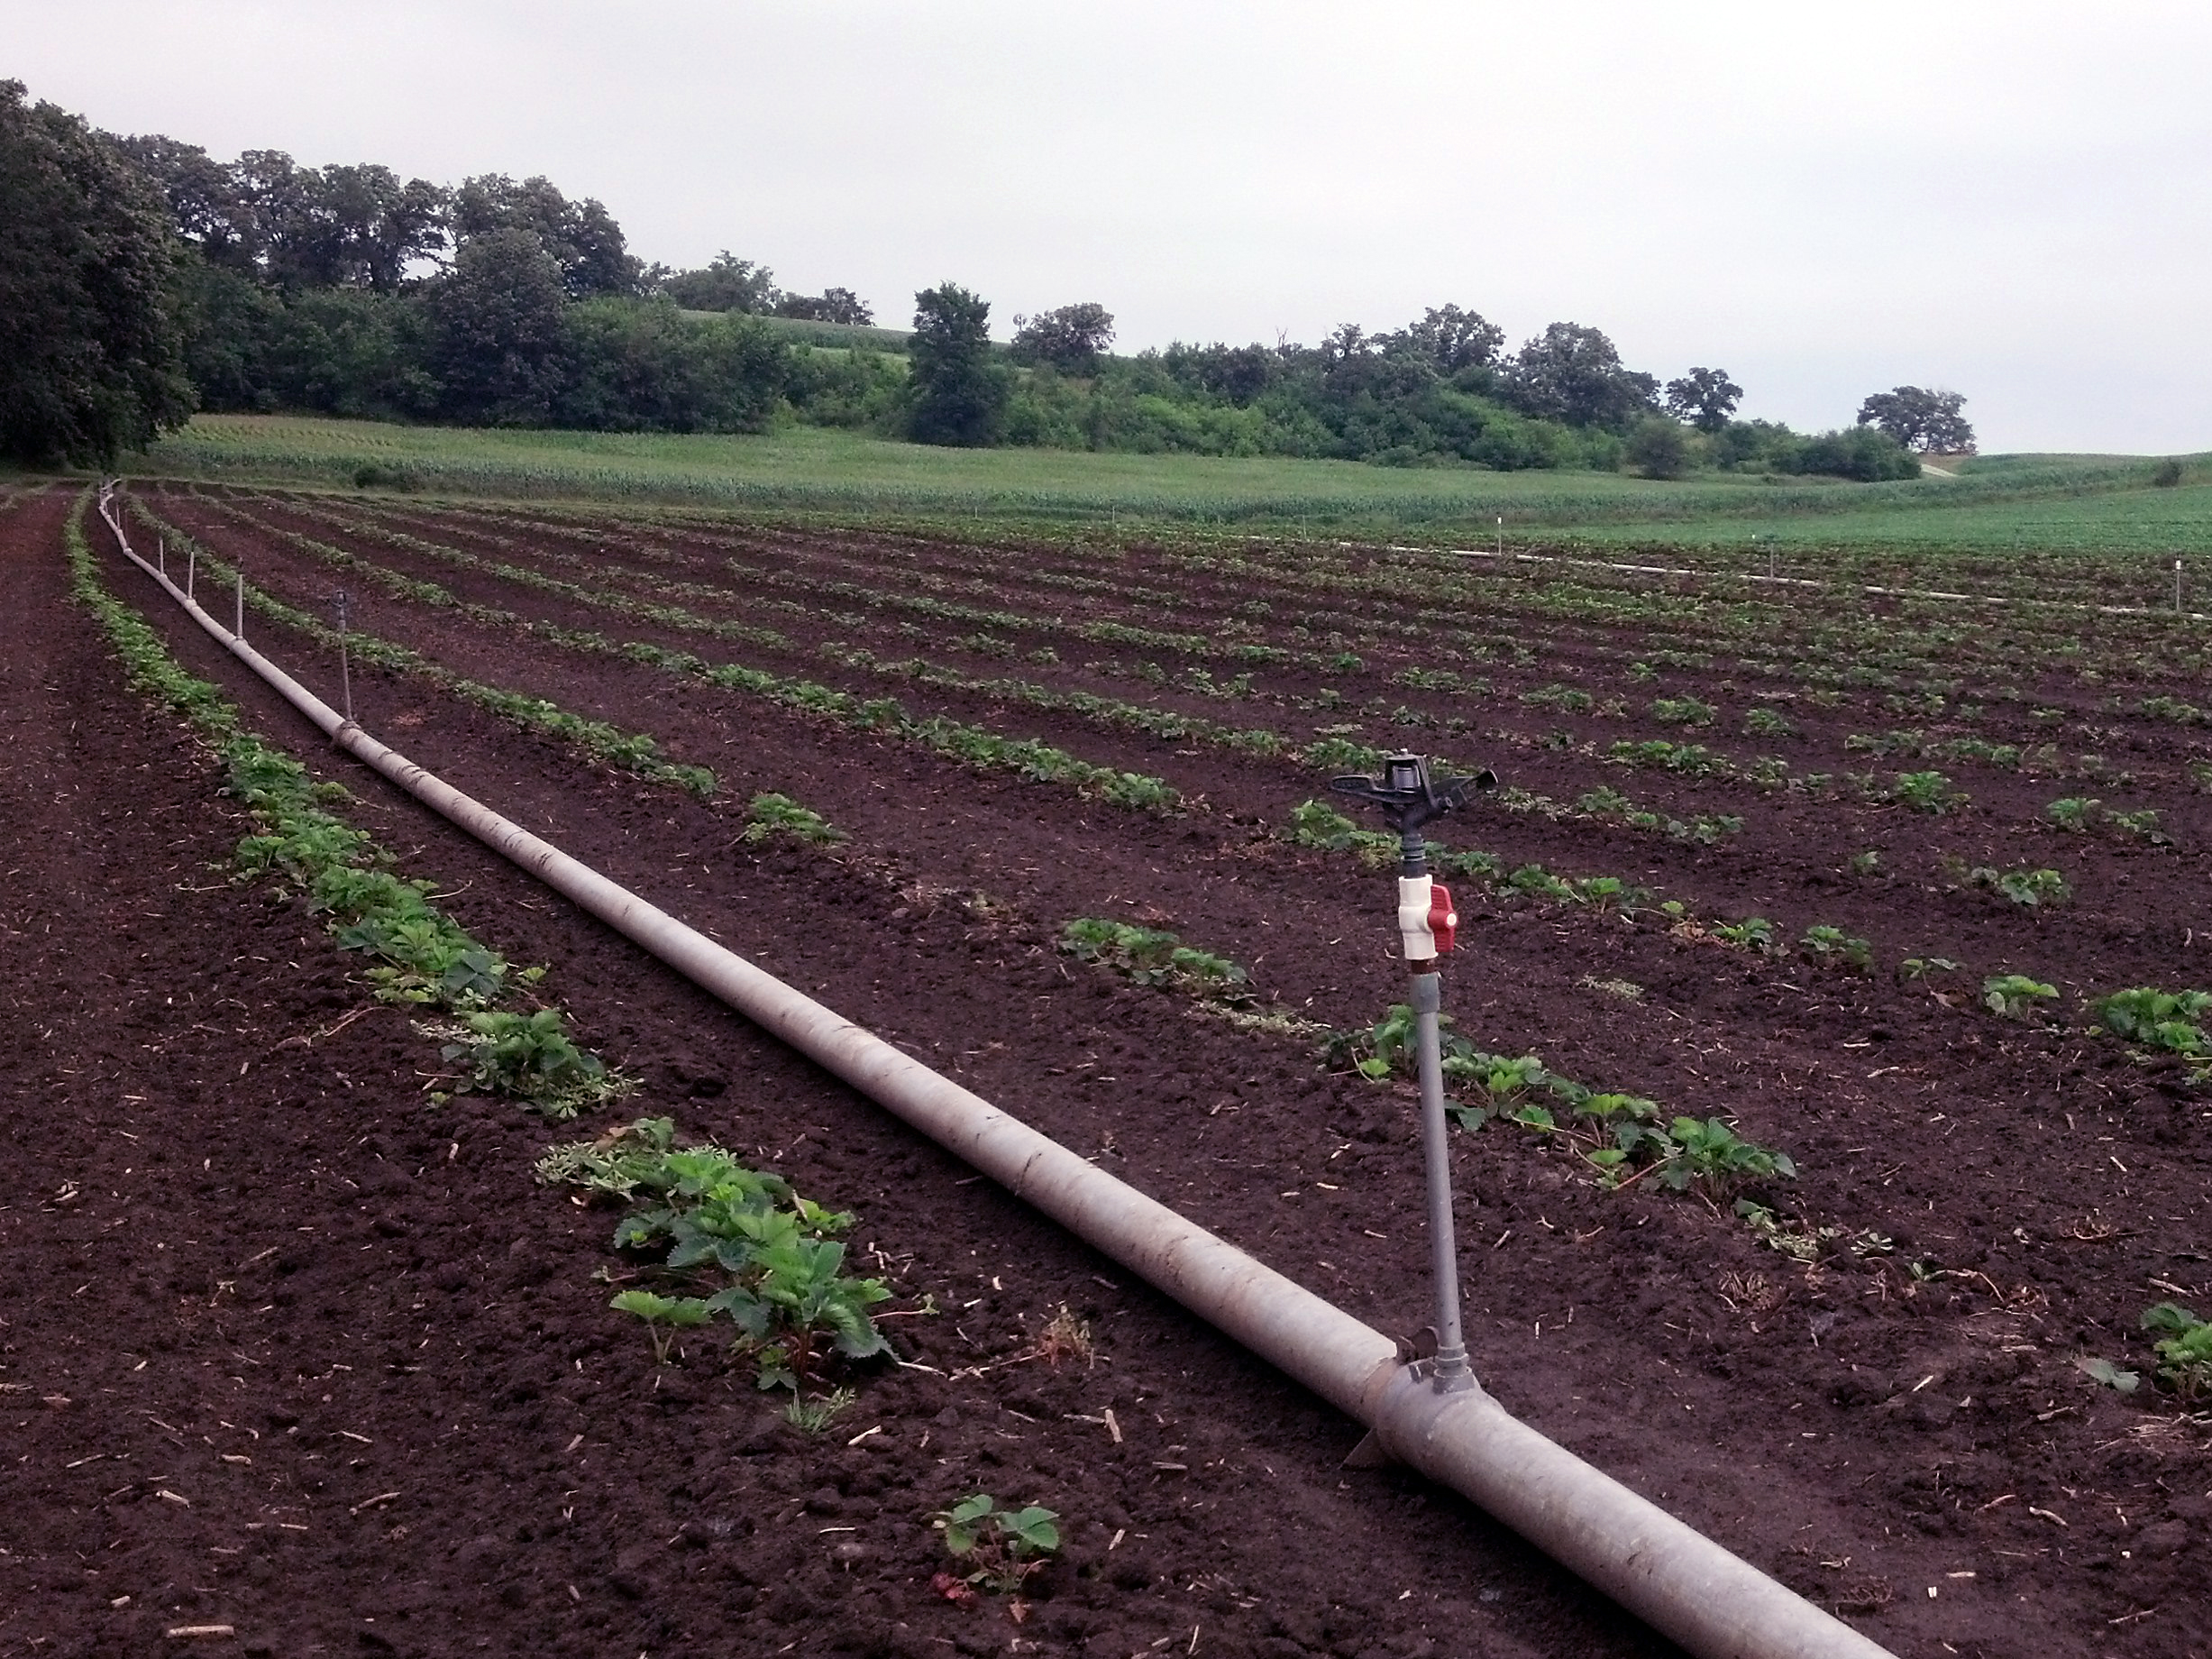 localized irrigation